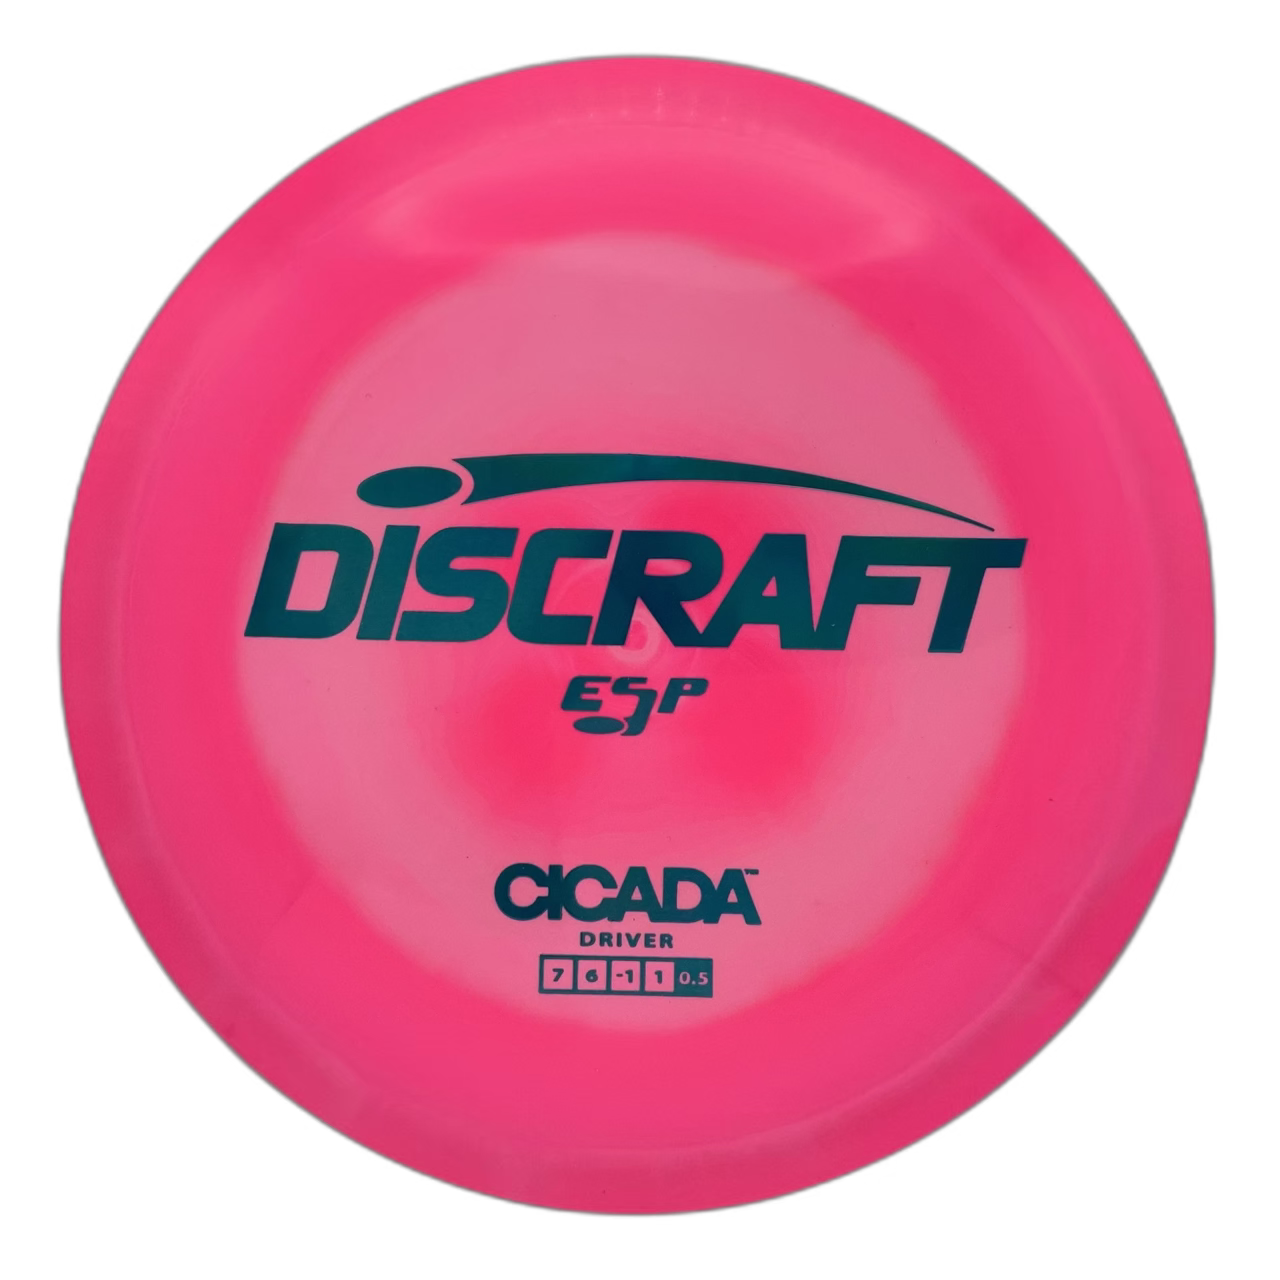 Discraft Cicada - Astro Discs TX - Houston Disc Golf